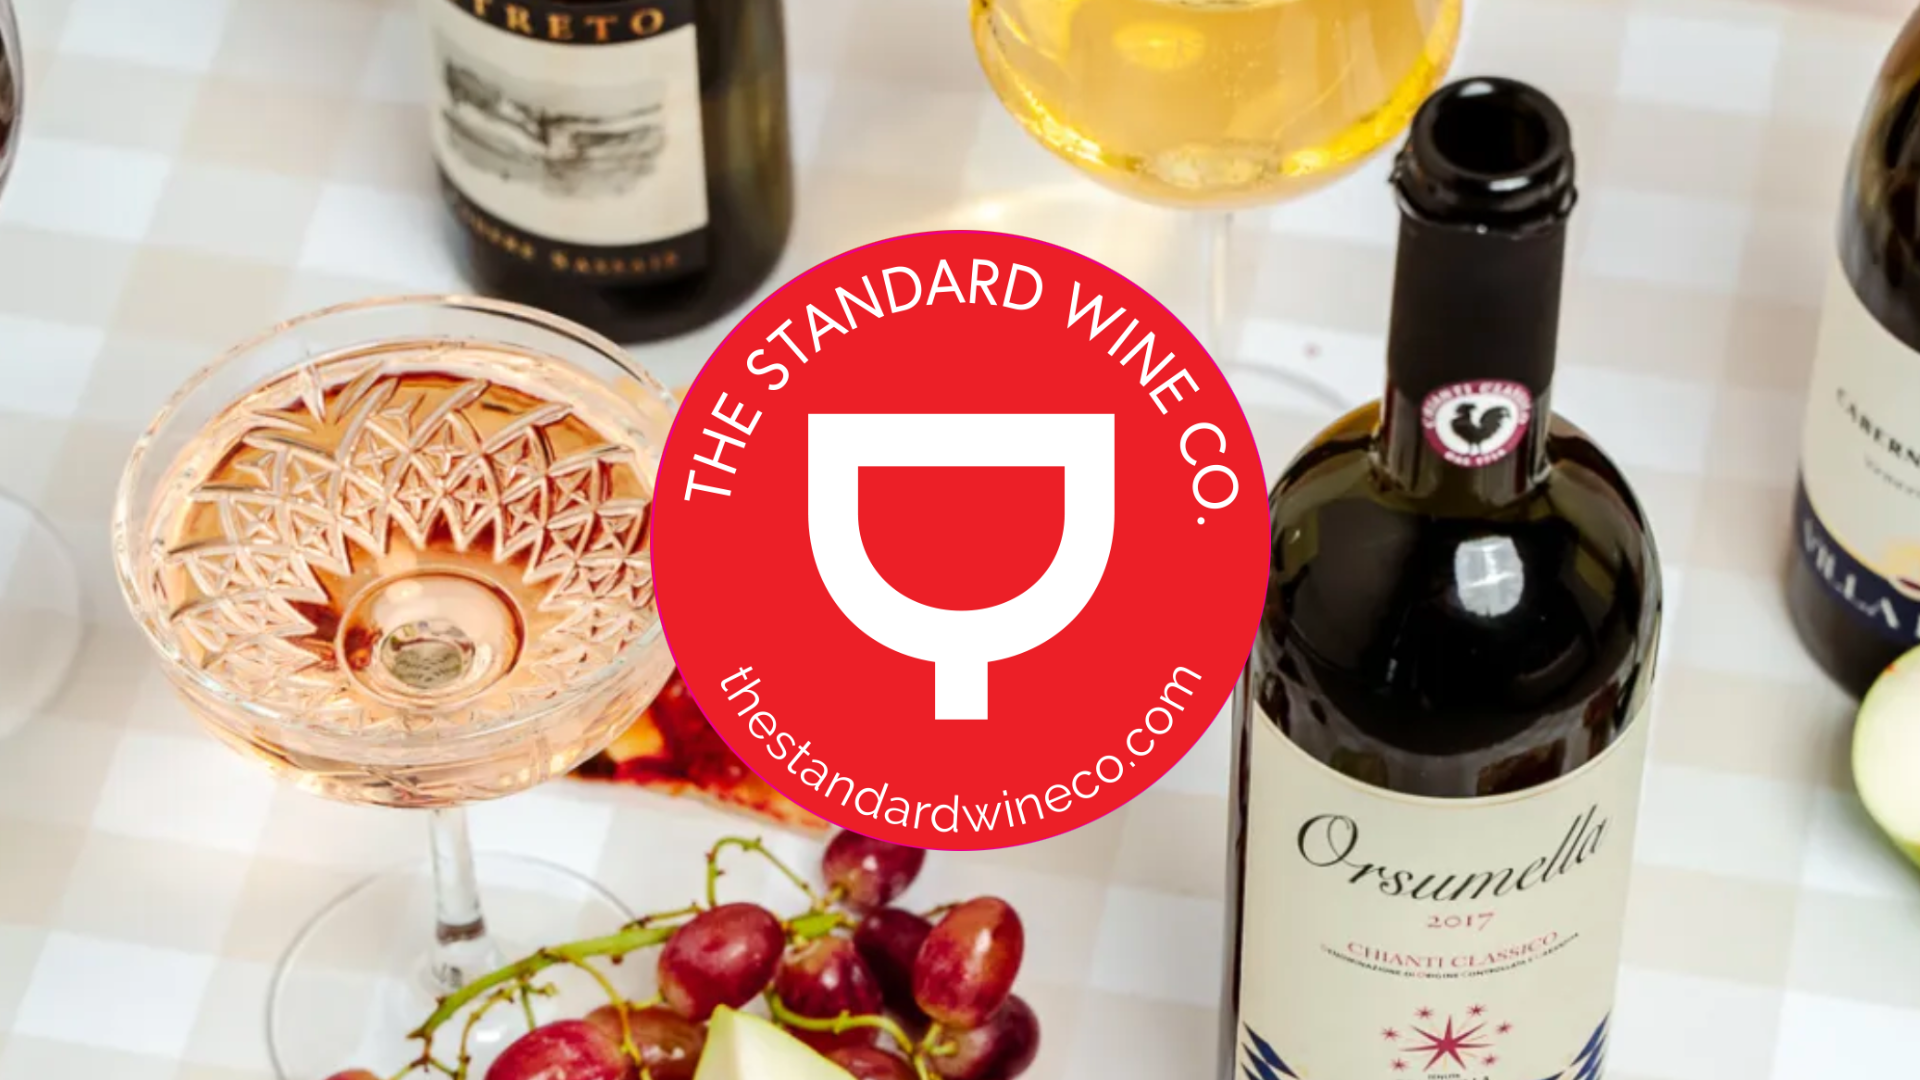 The Standard Wine co.